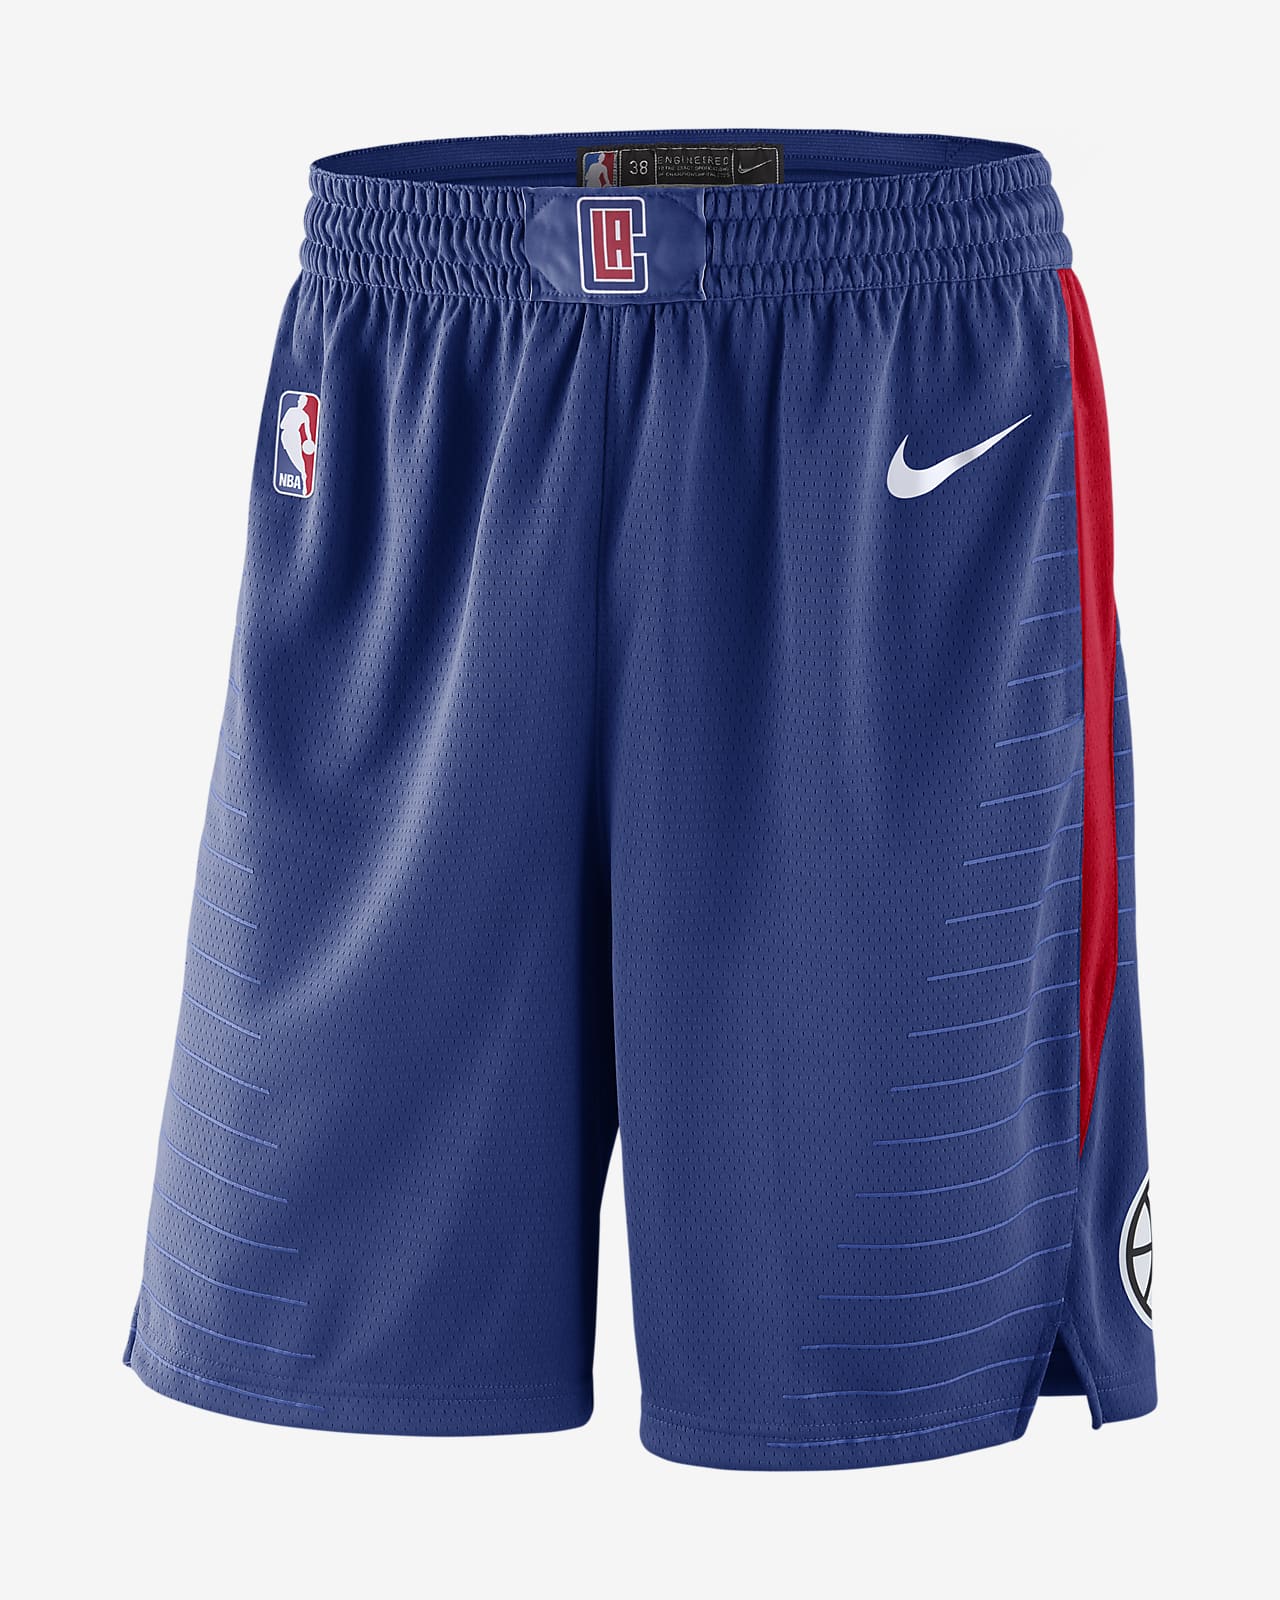 Los Angeles Clippers Icon Edition Nike NBA Swingman Shorts für Herren